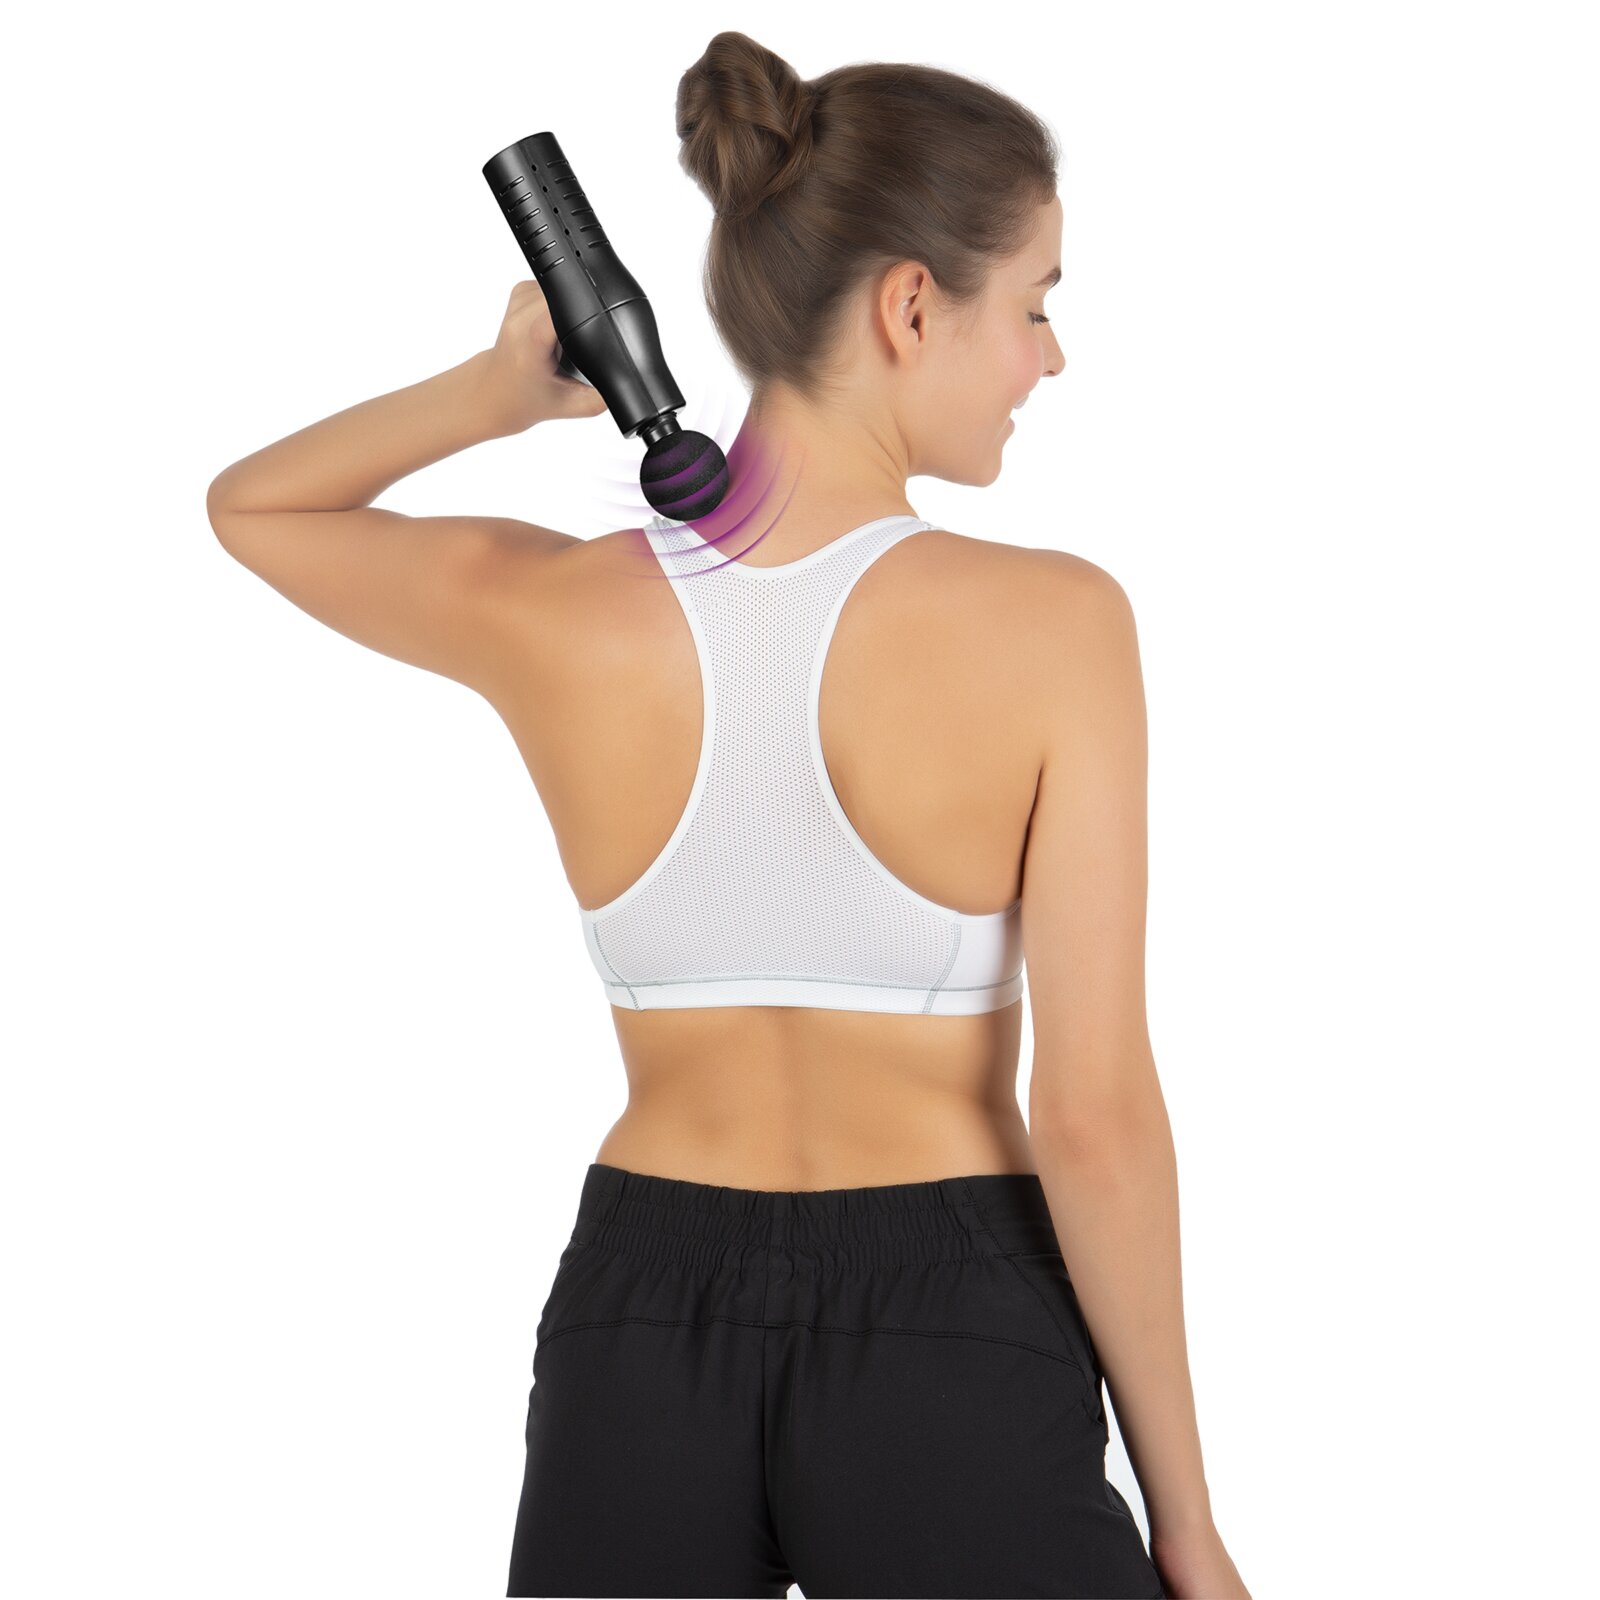 VITALMAXX Mini-Massage Gun - 5 Leistungsstufen | Online bei ROLLER kaufen | Massagegeräte